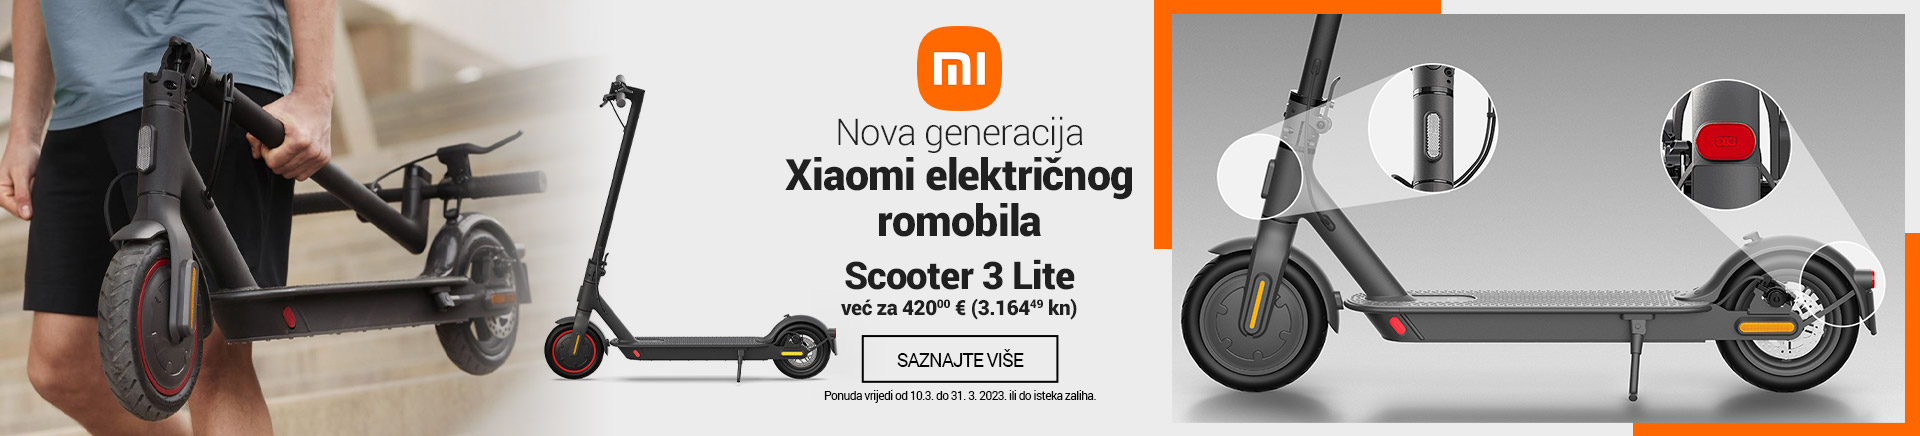 HR Nova generacija Xiaomi romobili Scooter 3 Lite MOBILE 380 X 436.jpg